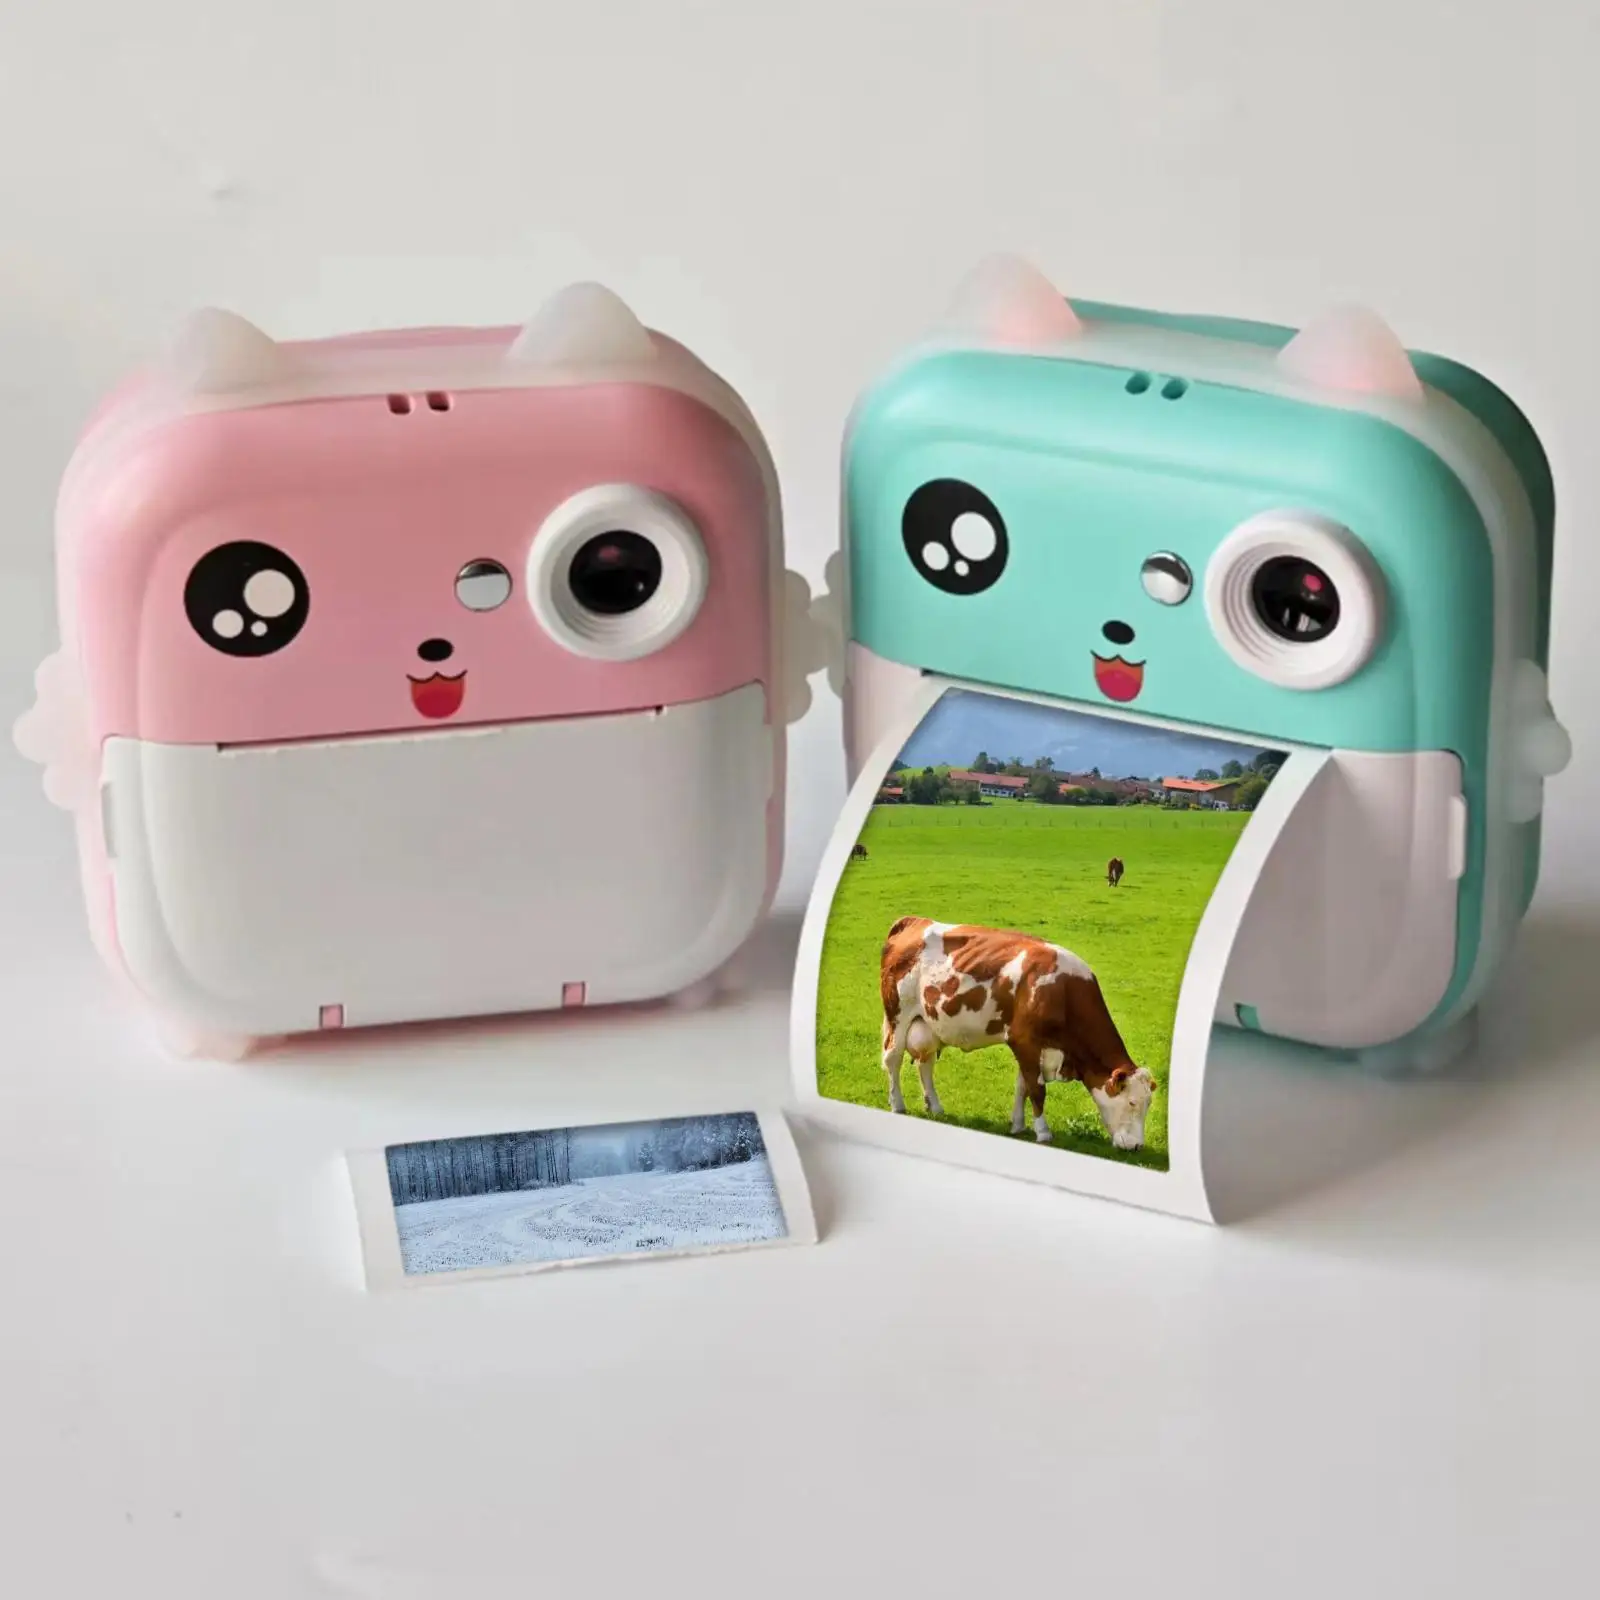 Camera Instant Print Toys Kids Digital Camera for Girl Boys Age 4 5 6